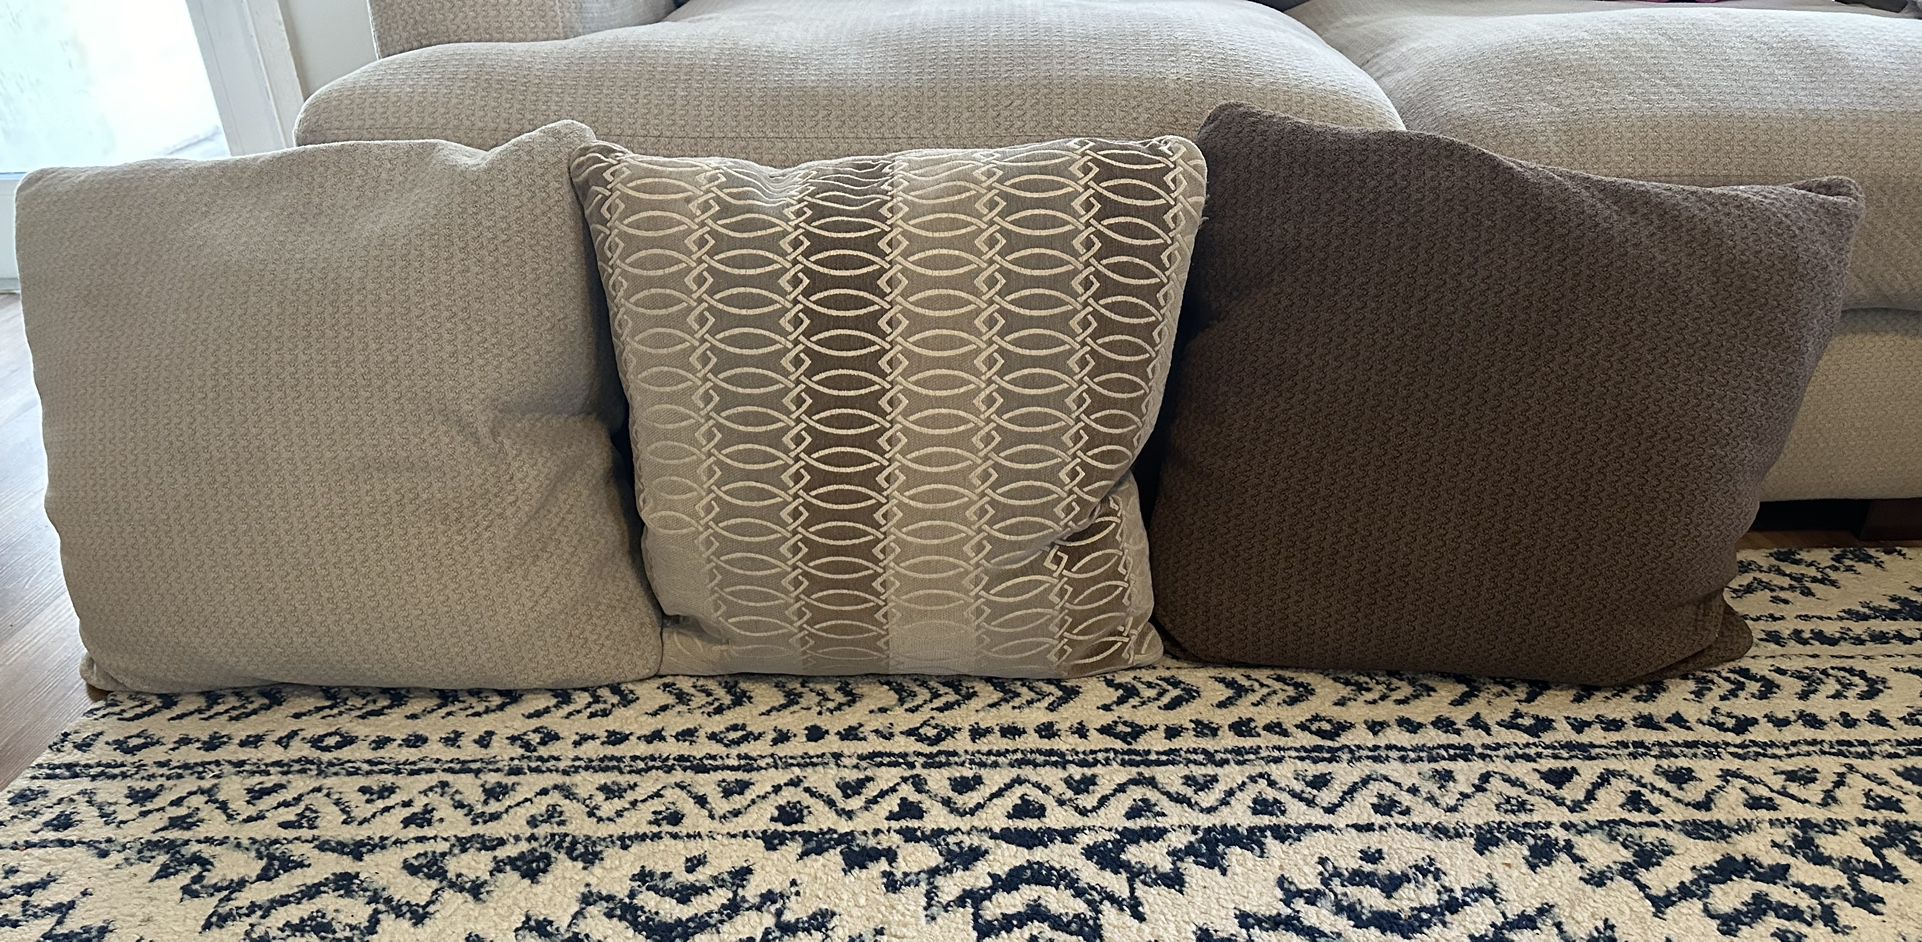 Couch Pillows/decorative Pillows 